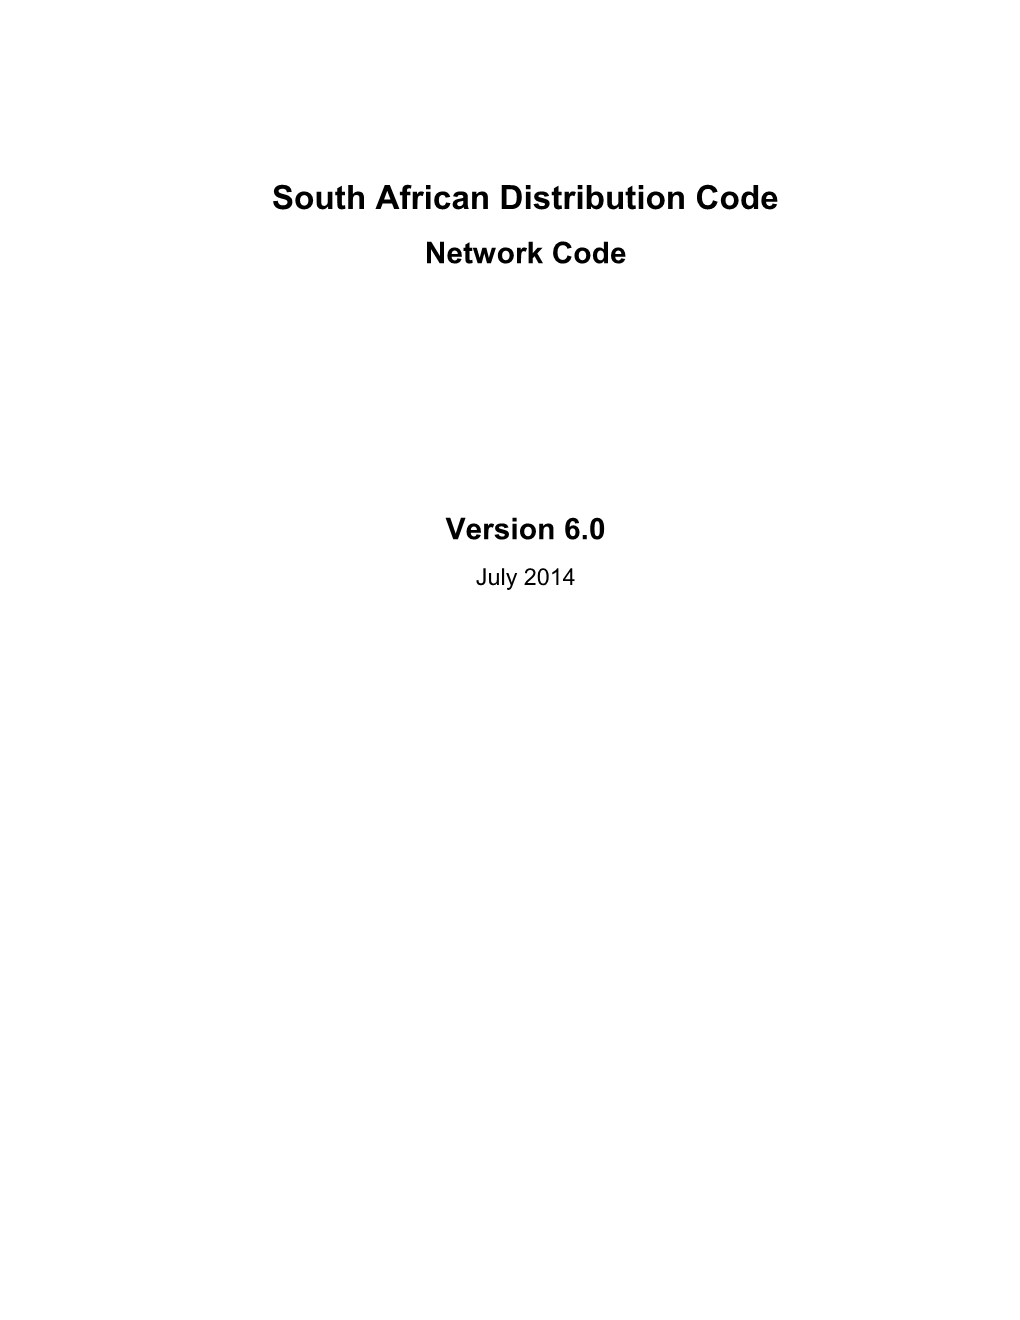 RSA Distribution Network Code Ver 6